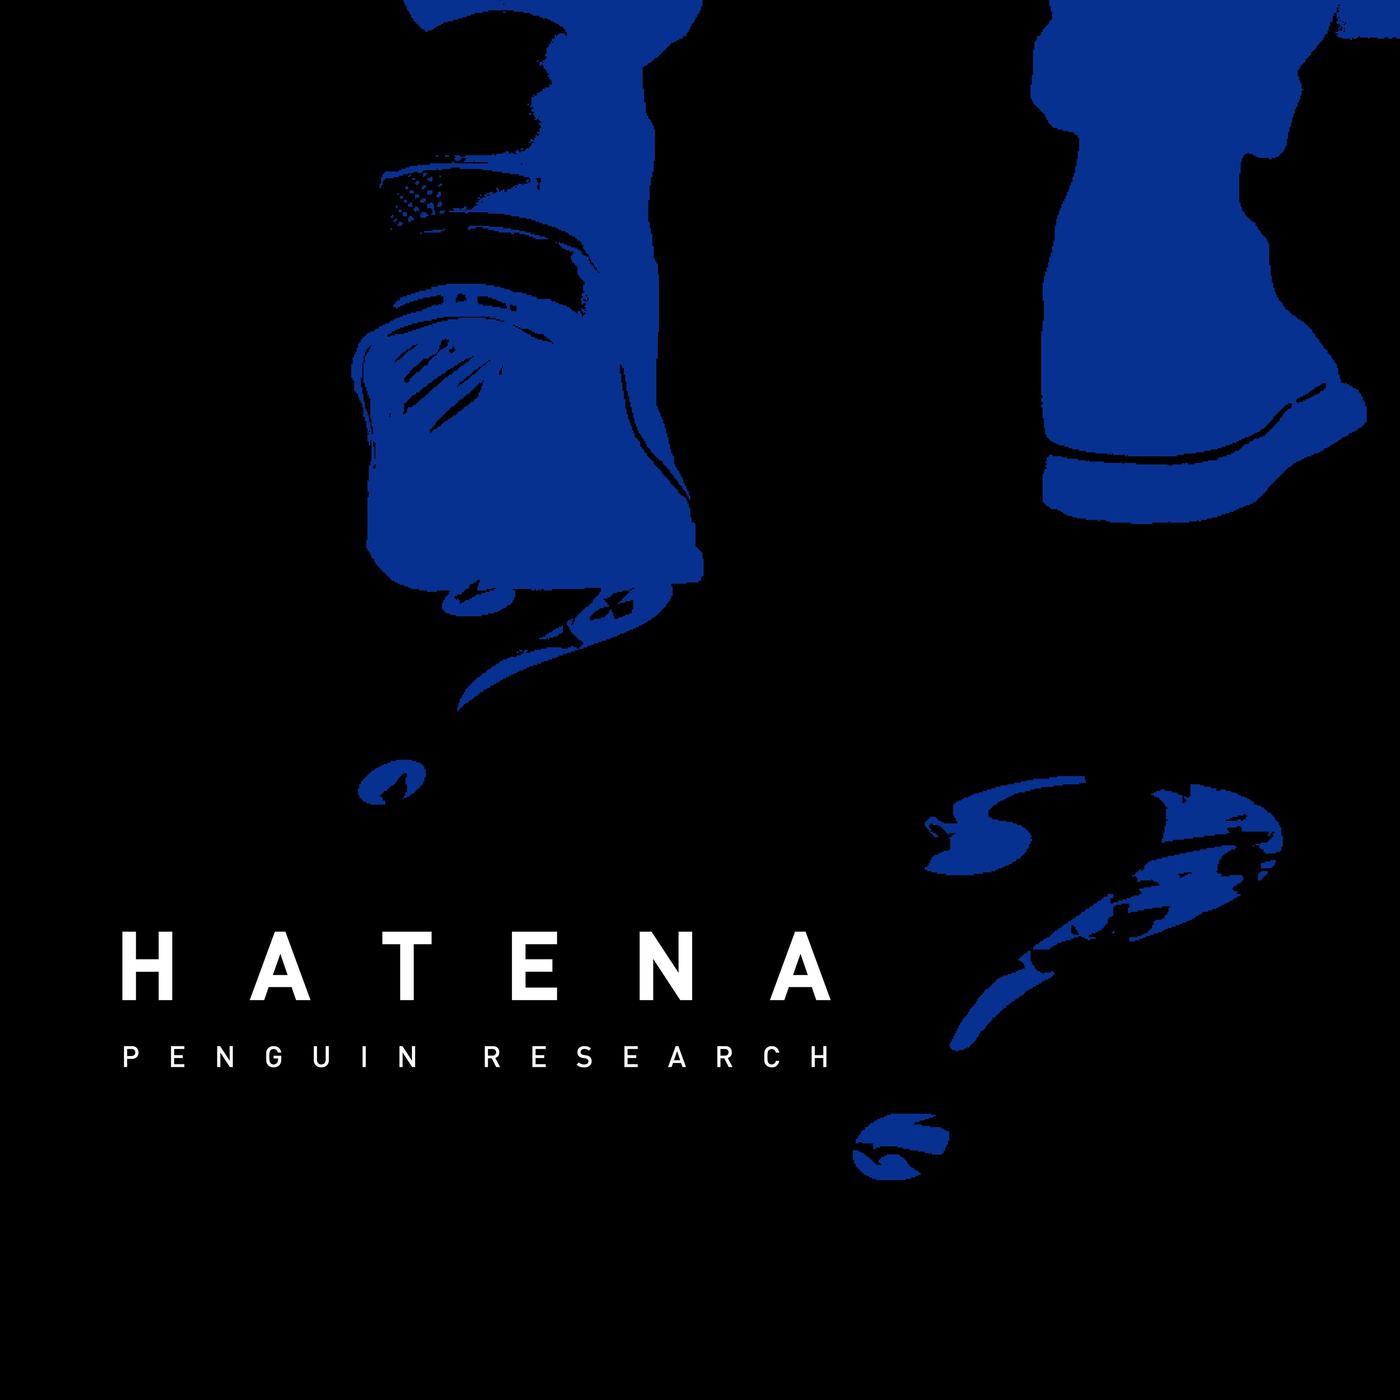 HATENA歌词 歌手PENGUIN RESEARCH-专辑HATENA-单曲《HATENA》LRC歌词下载